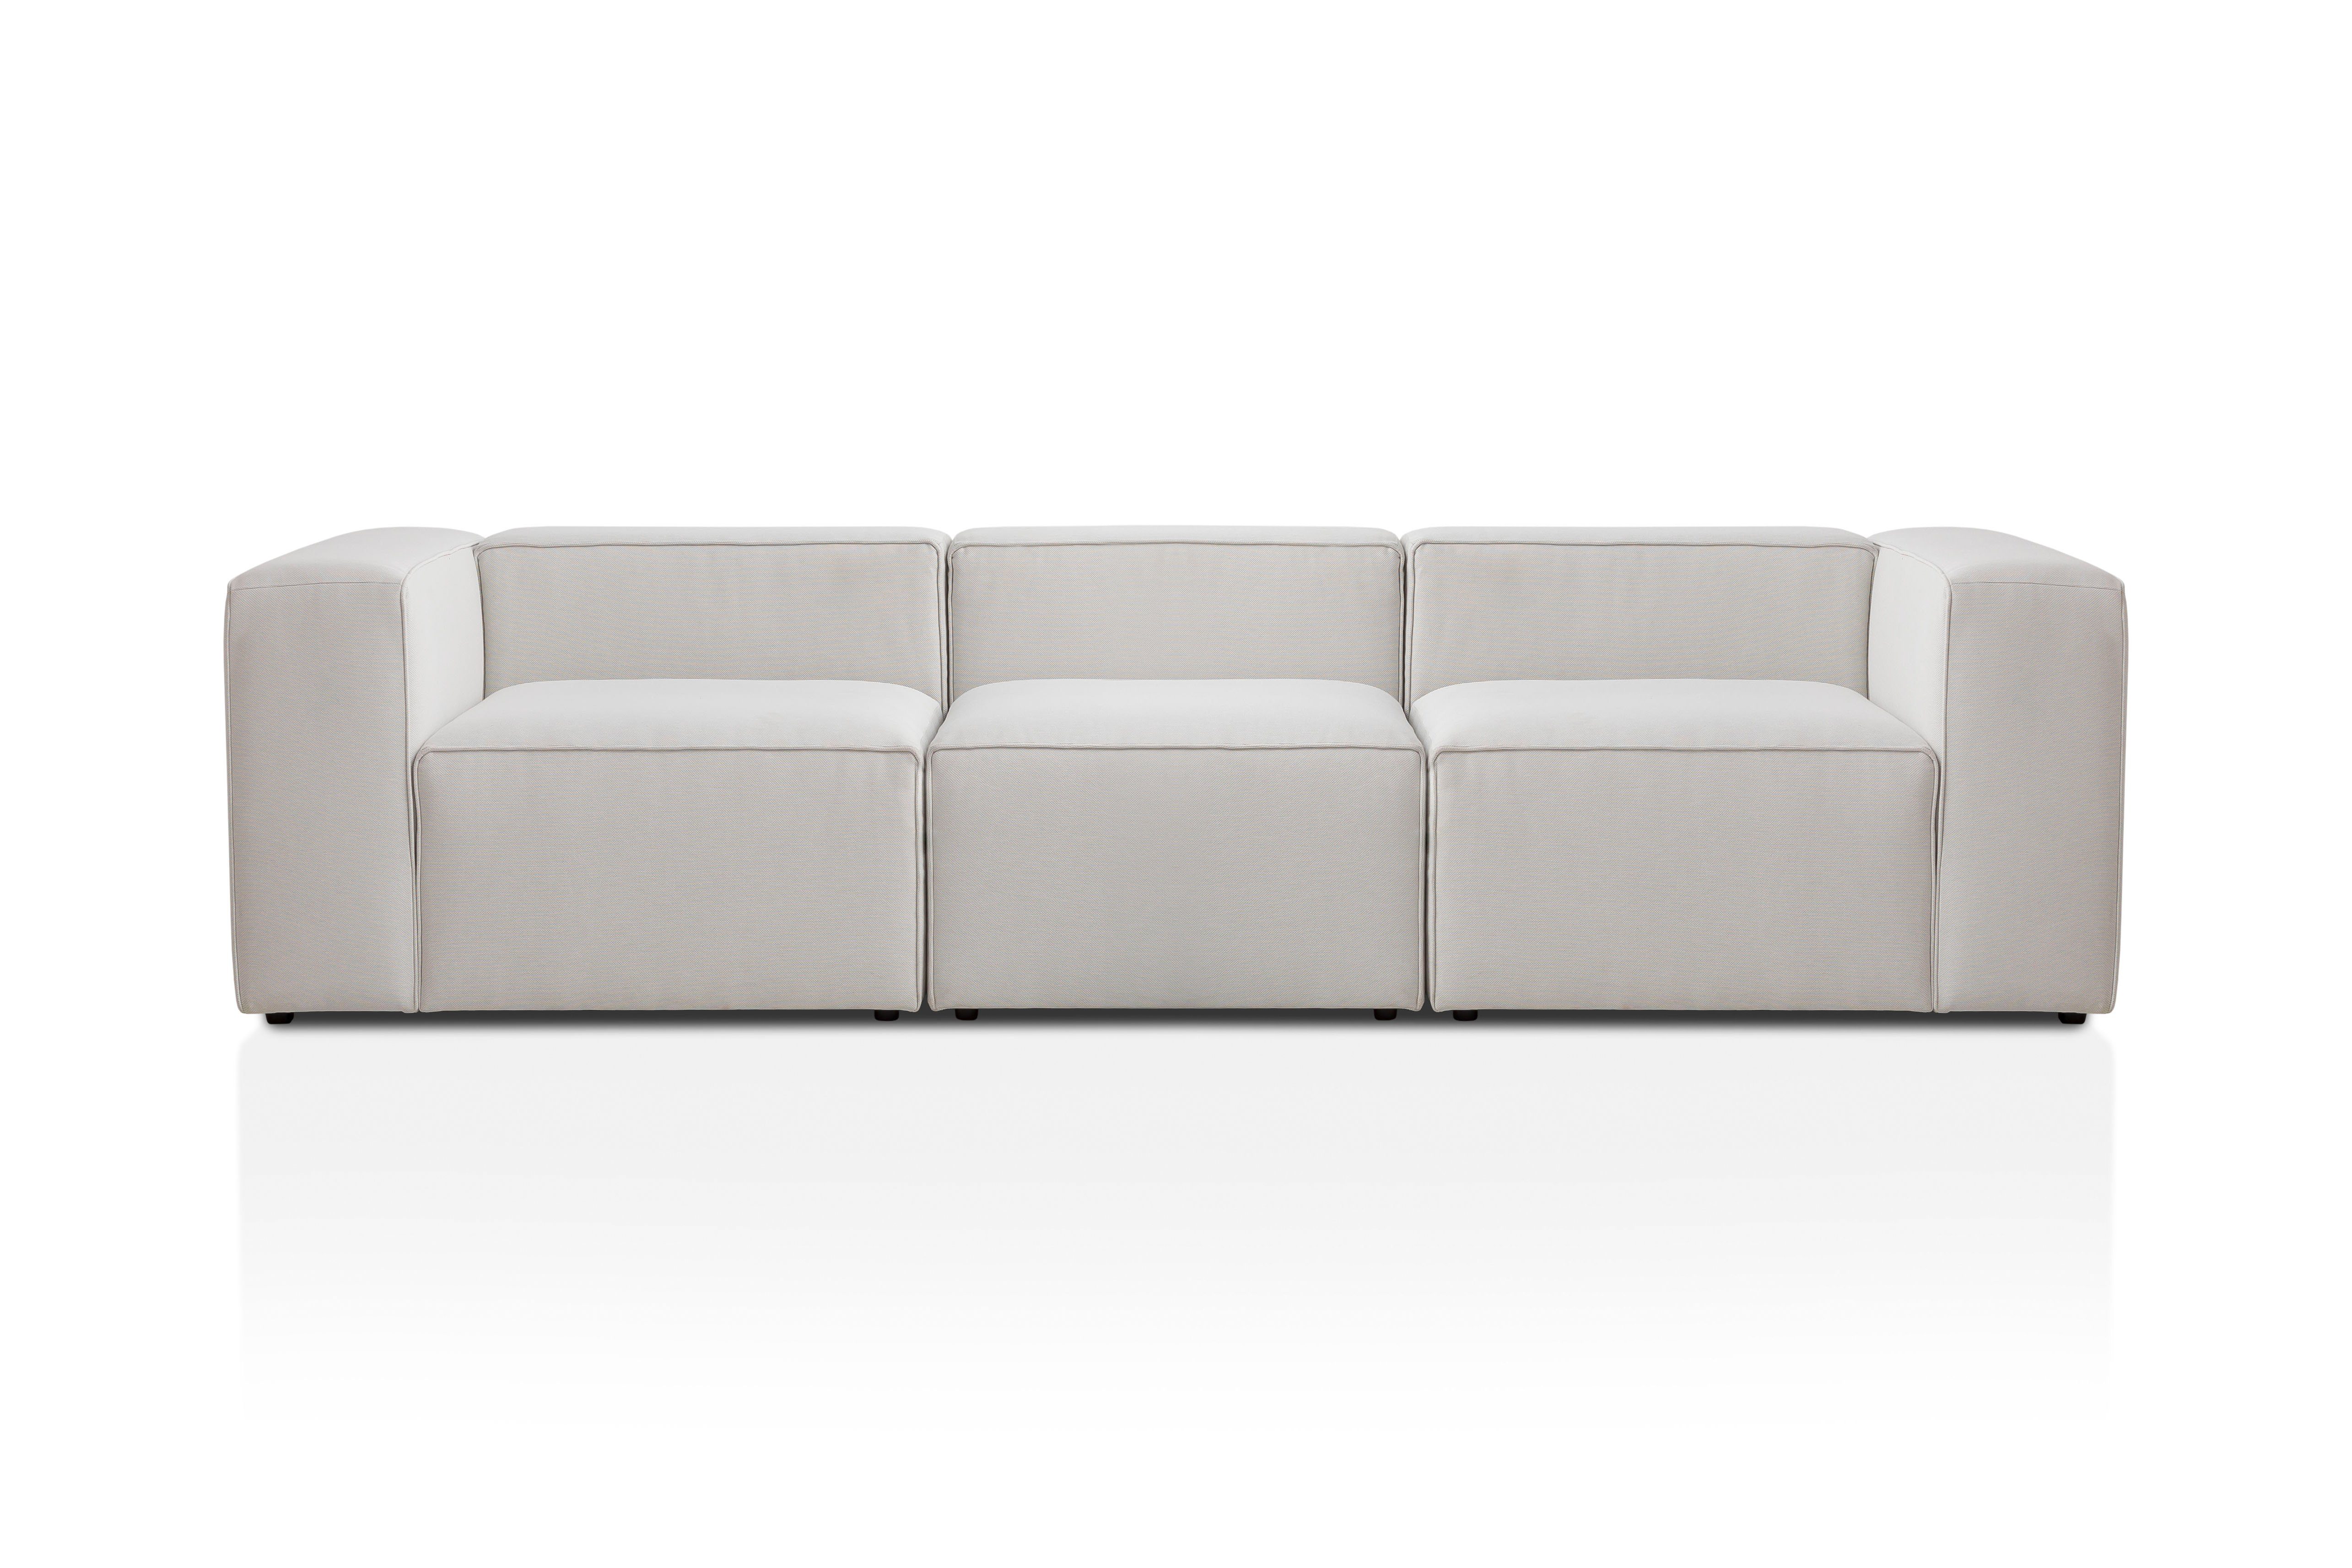 XDREAM 3-Sitzer Modulares Sofa Milos, individuell kombinierbare Wohnlandschaft, 3 Teile, skandinavisches Design